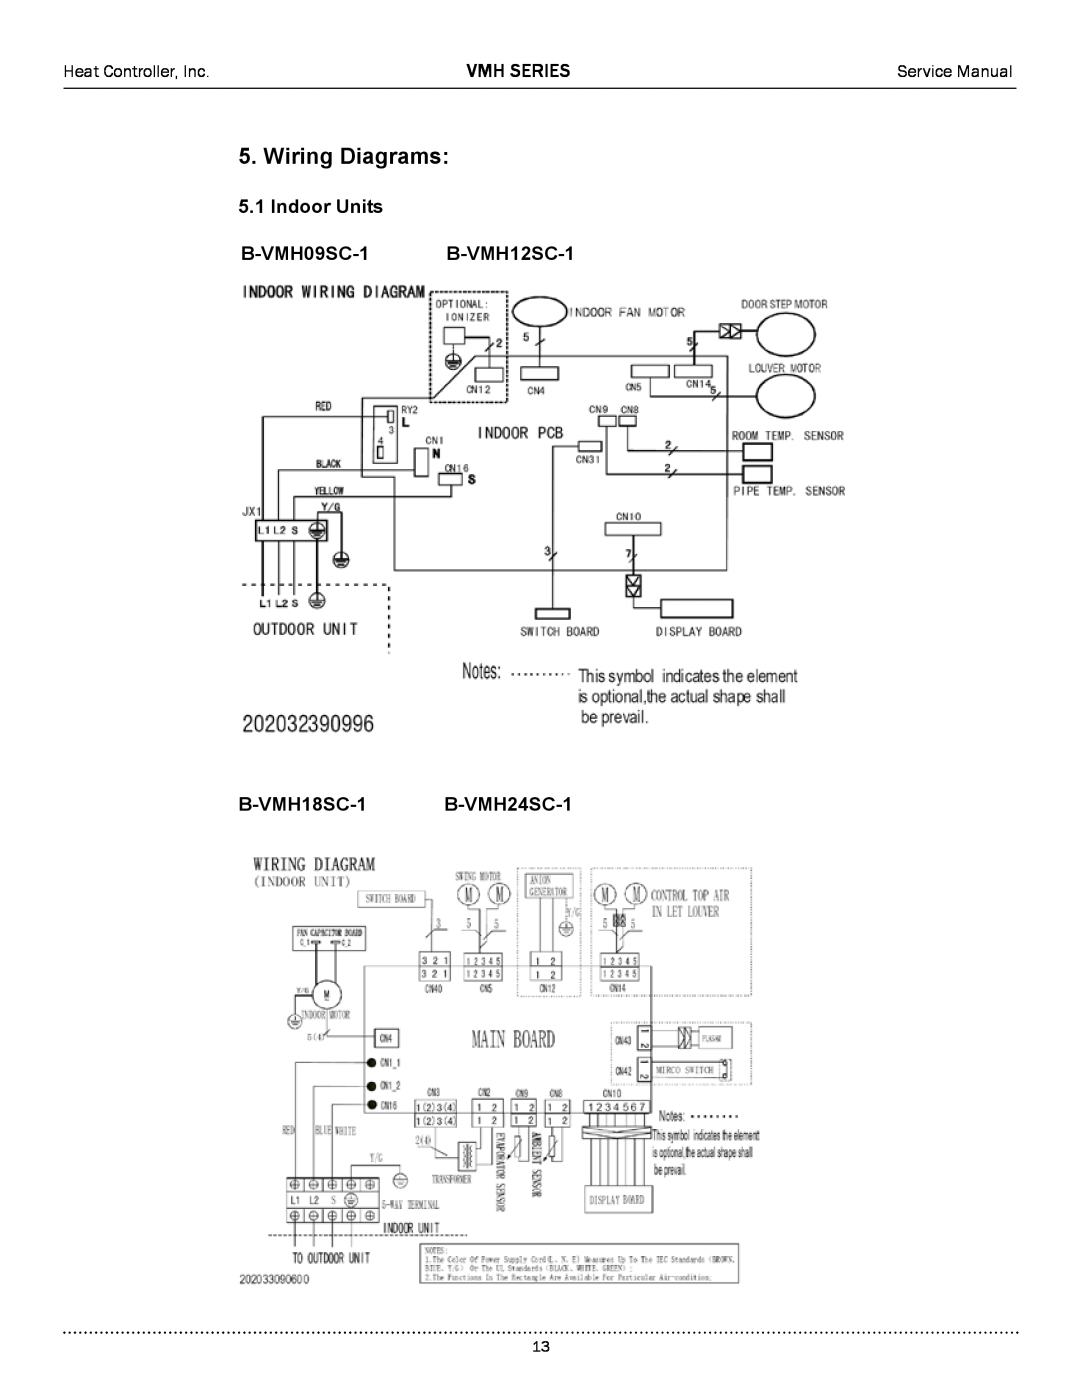 Heat Controller Wiring Diagrams, VMH Series, Indoor Units B-VMH09SC-1 B-VMH12SC-1, B-VMH18SC-1 B-VMH24SC-1 